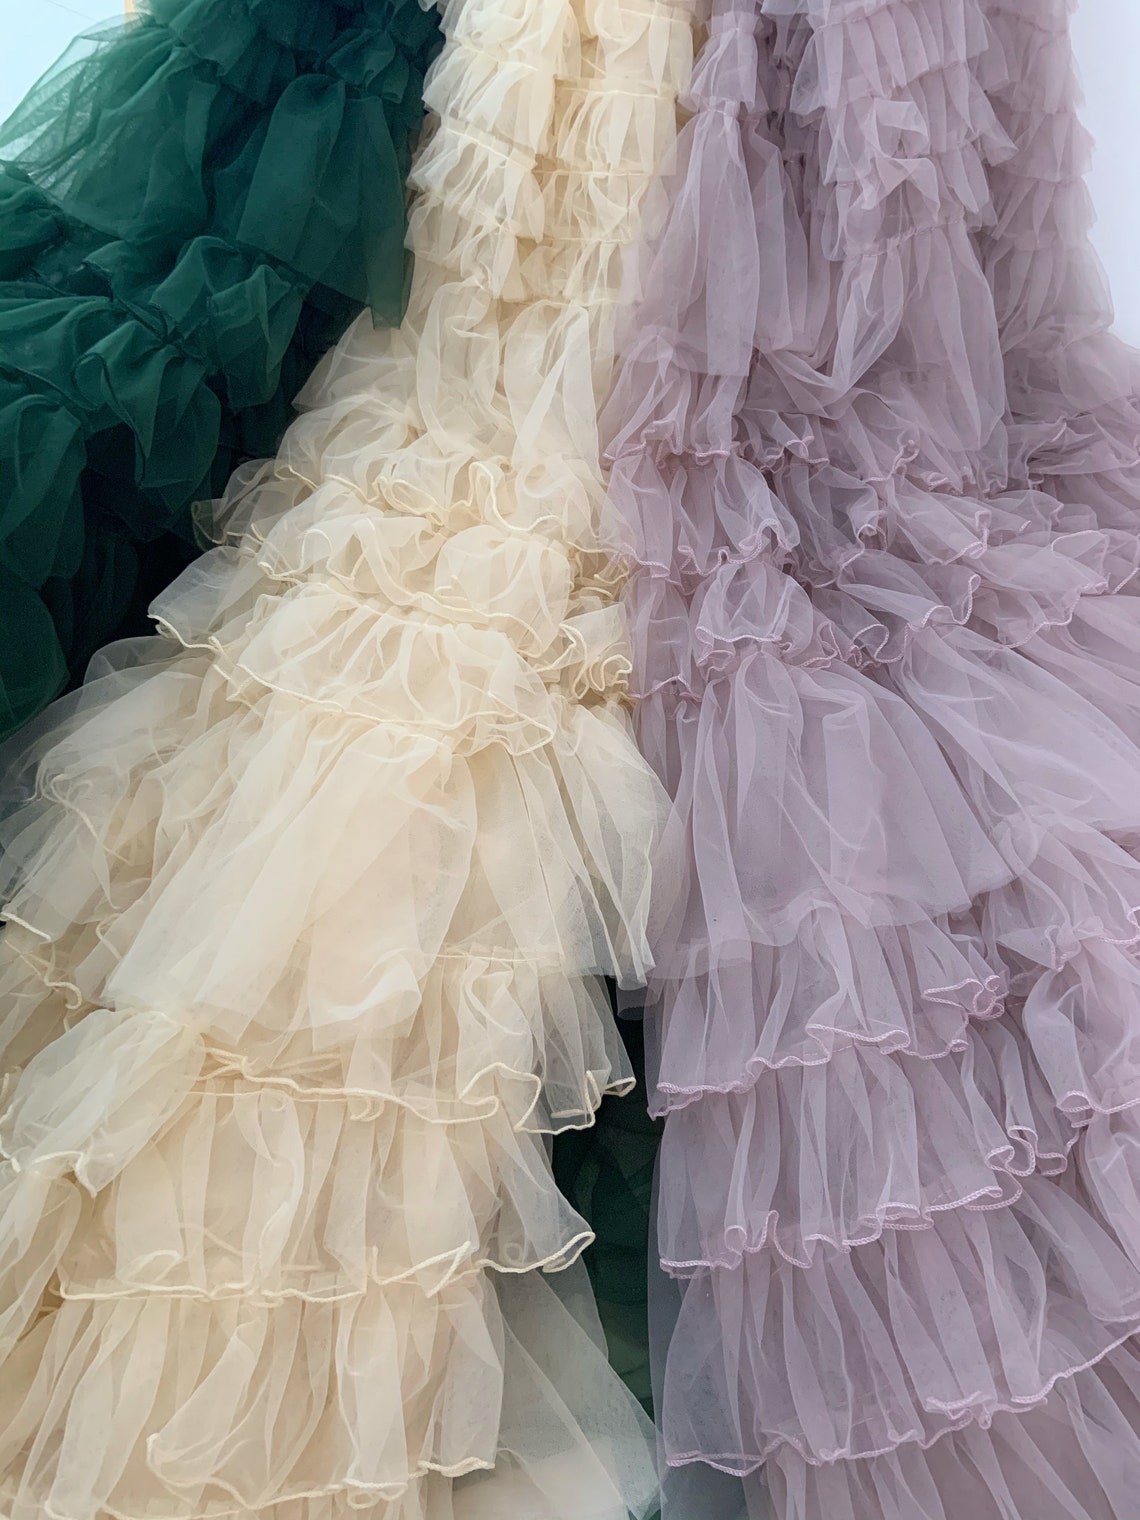 Puffy ruffle fabric for cake dress costume dress | Etsy